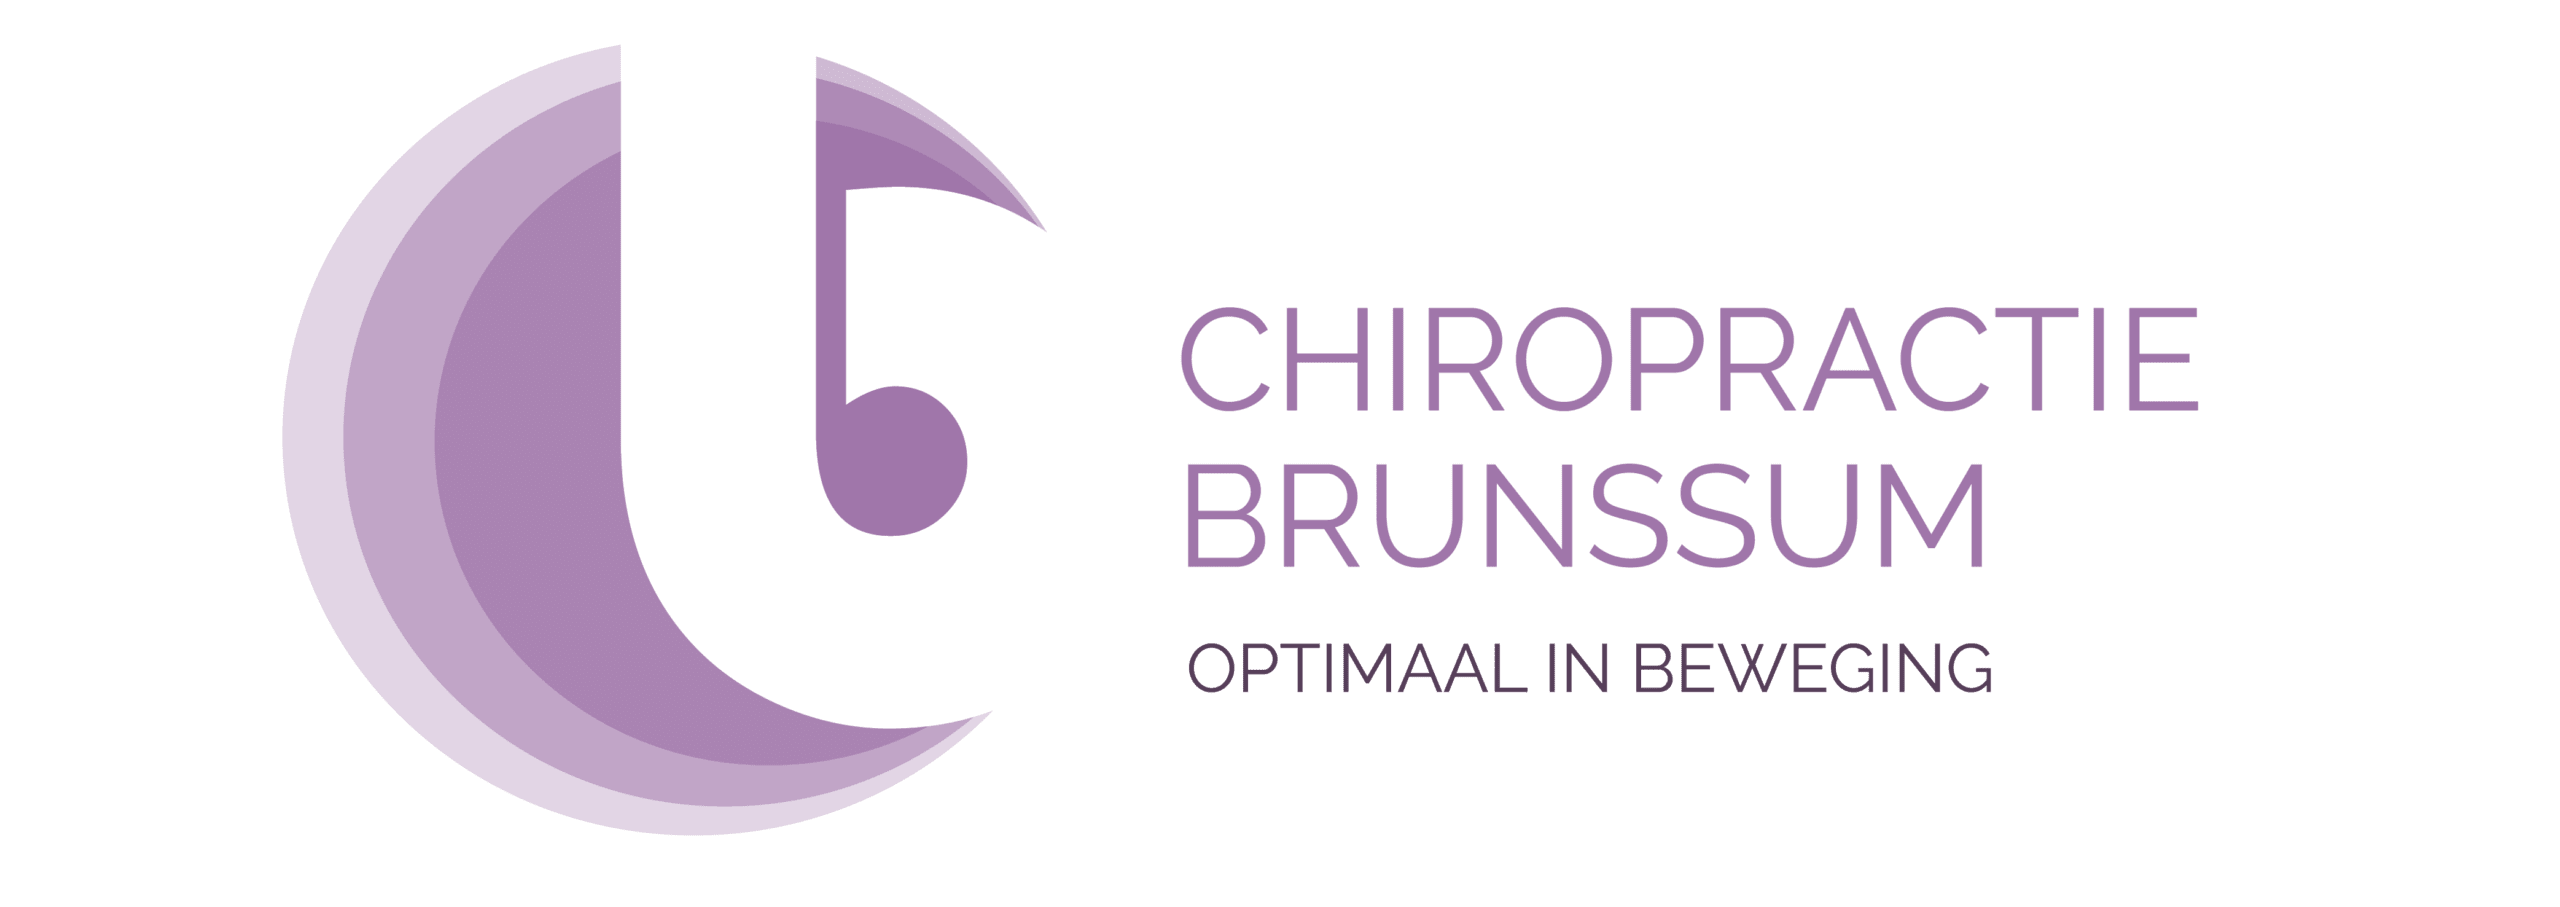 CHIROPRACTIE BRUNSSUM